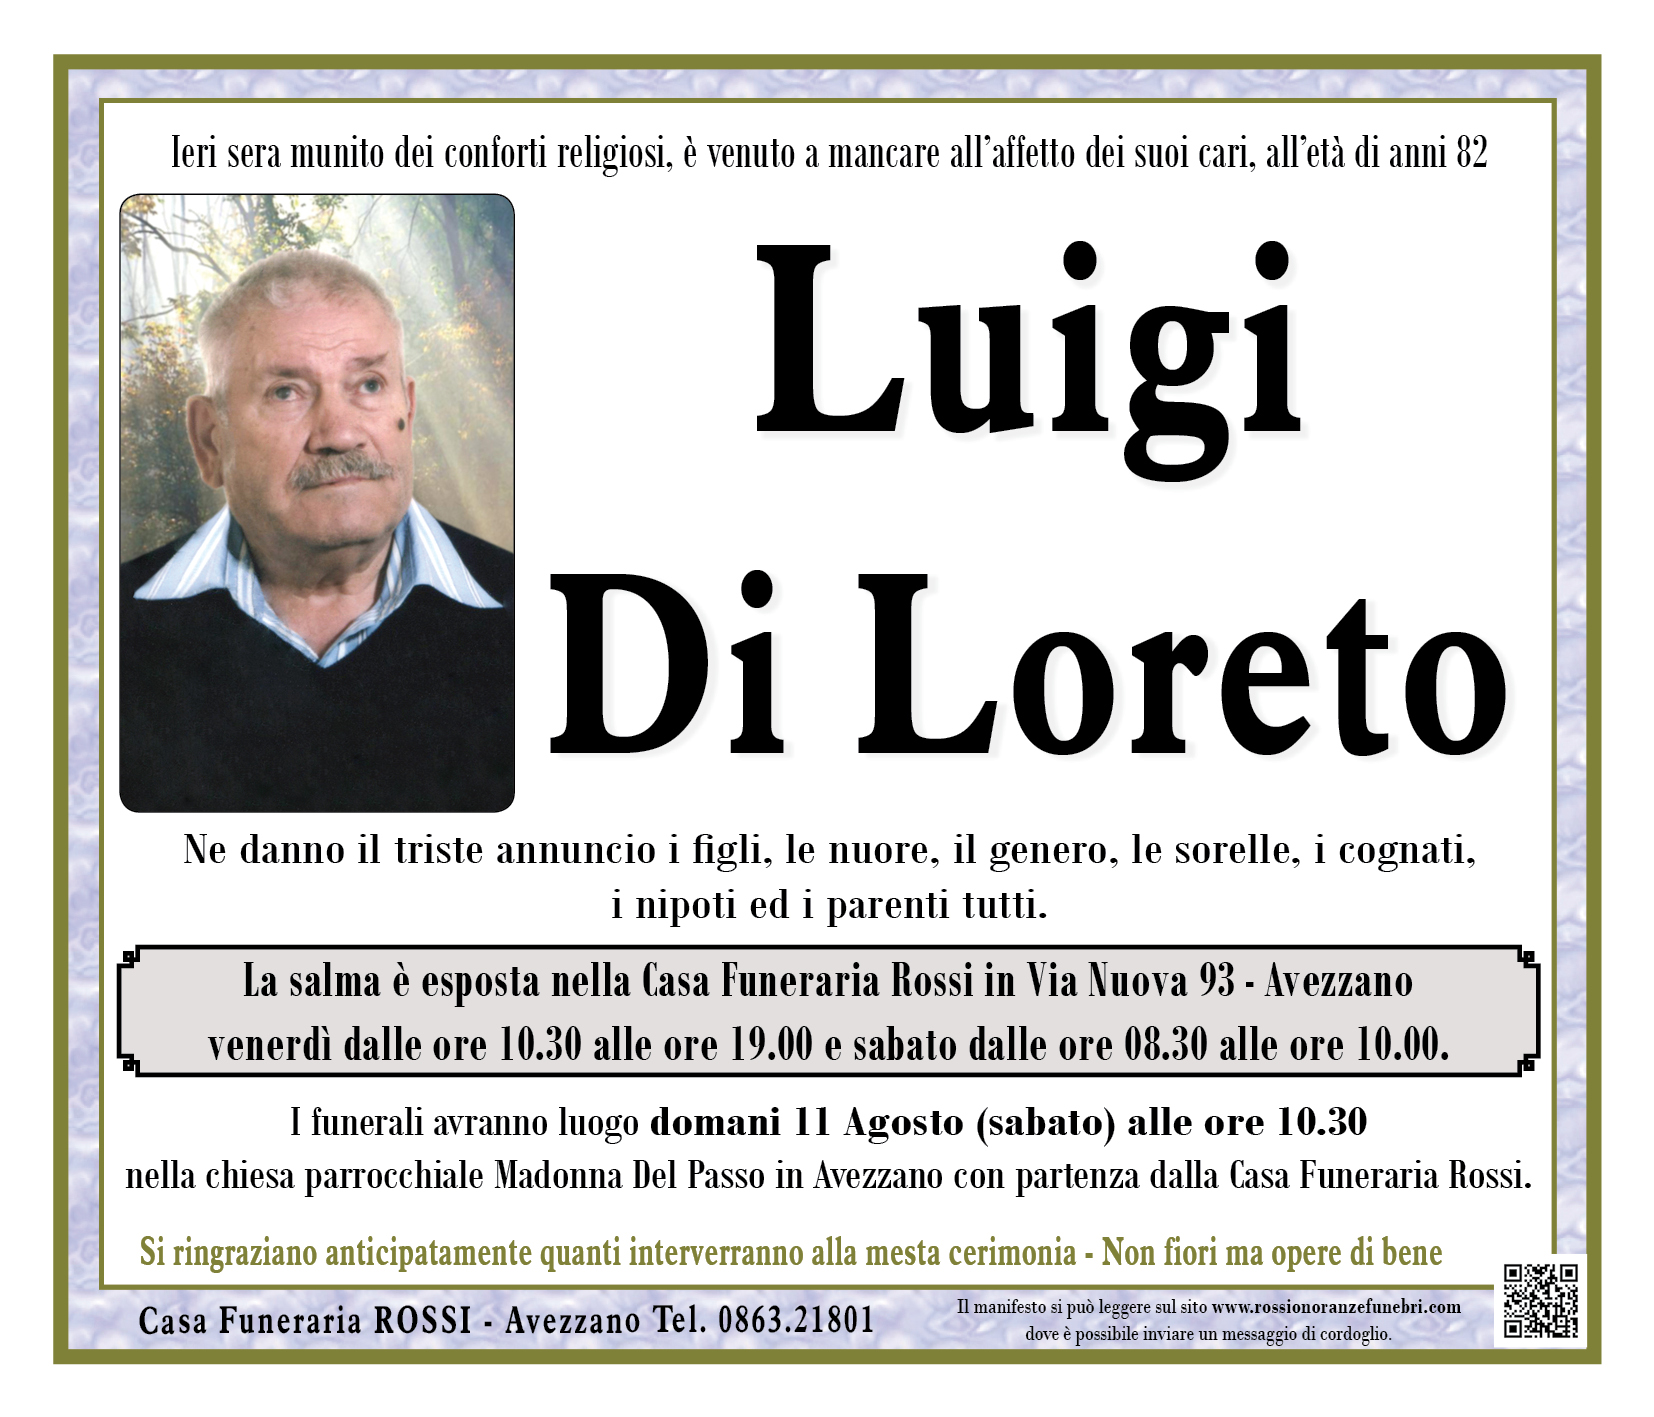 Luigi Di Loreto